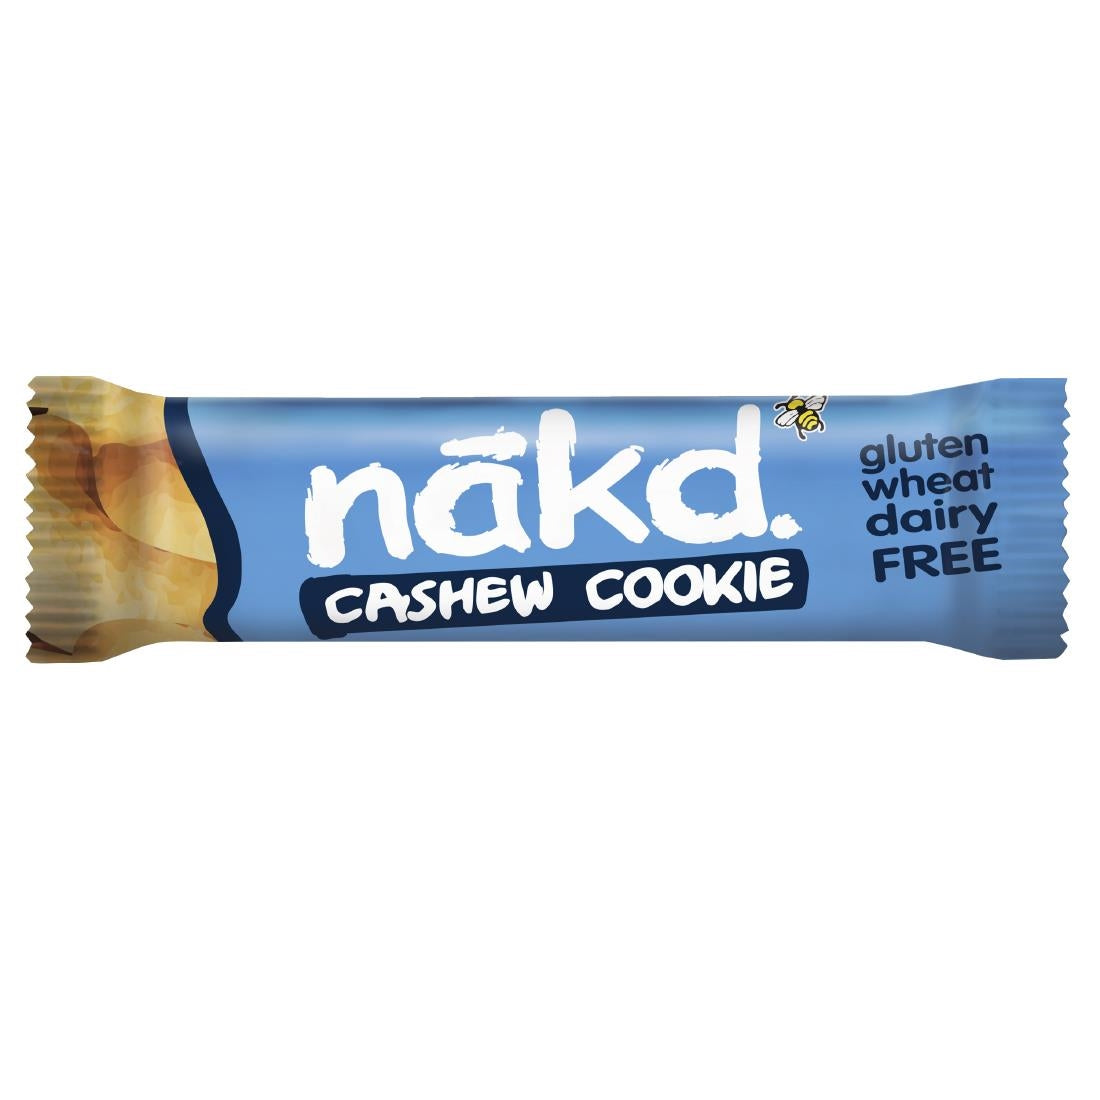 HS831 Nakd Bar Cashew Cookie 35g (Pack of 18)